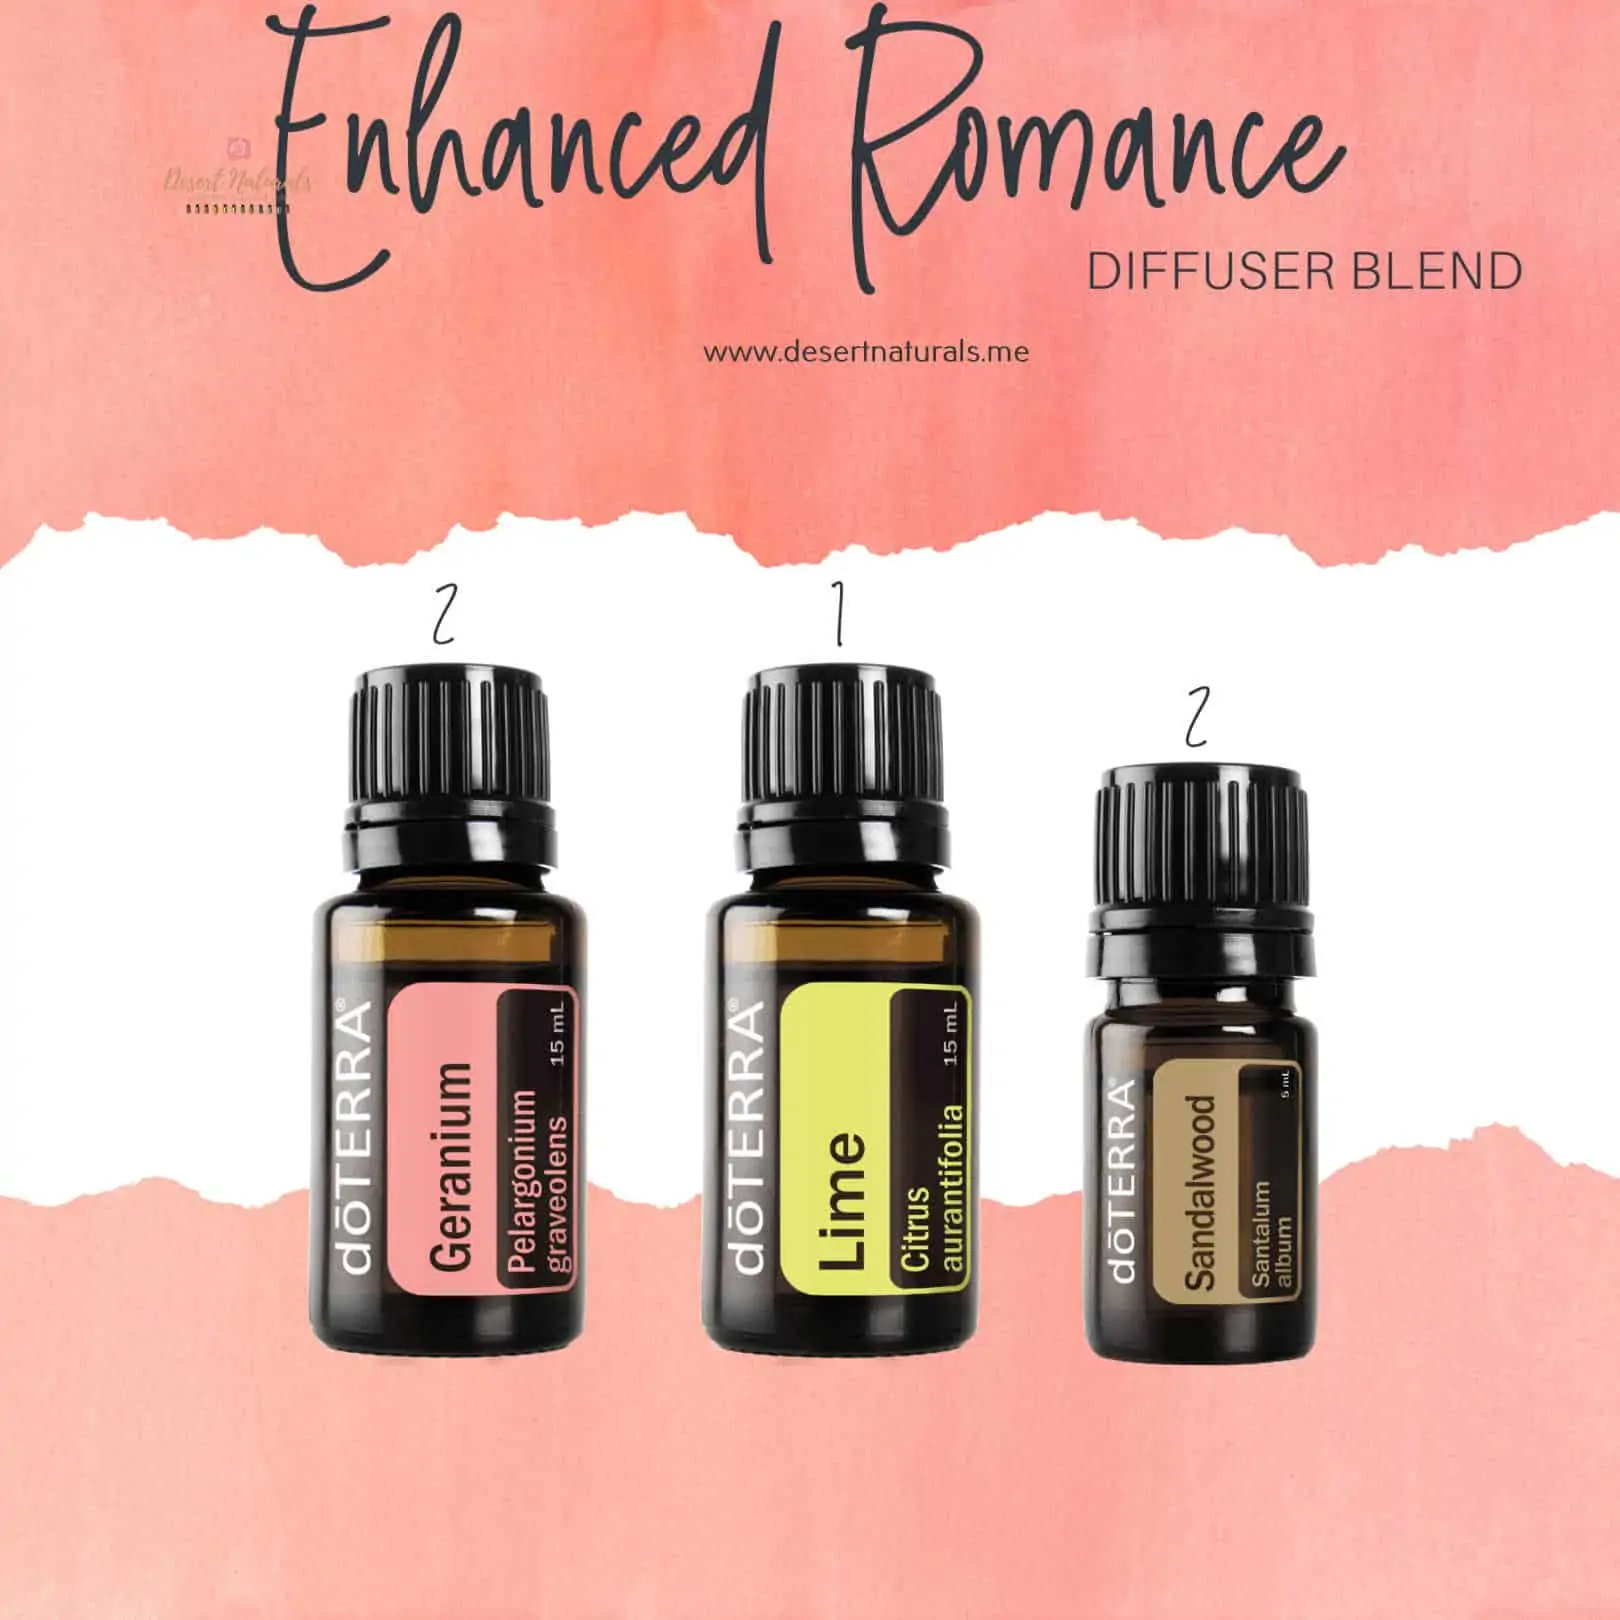 Valentines essental oils for intimacy and romance blend enhanced romance